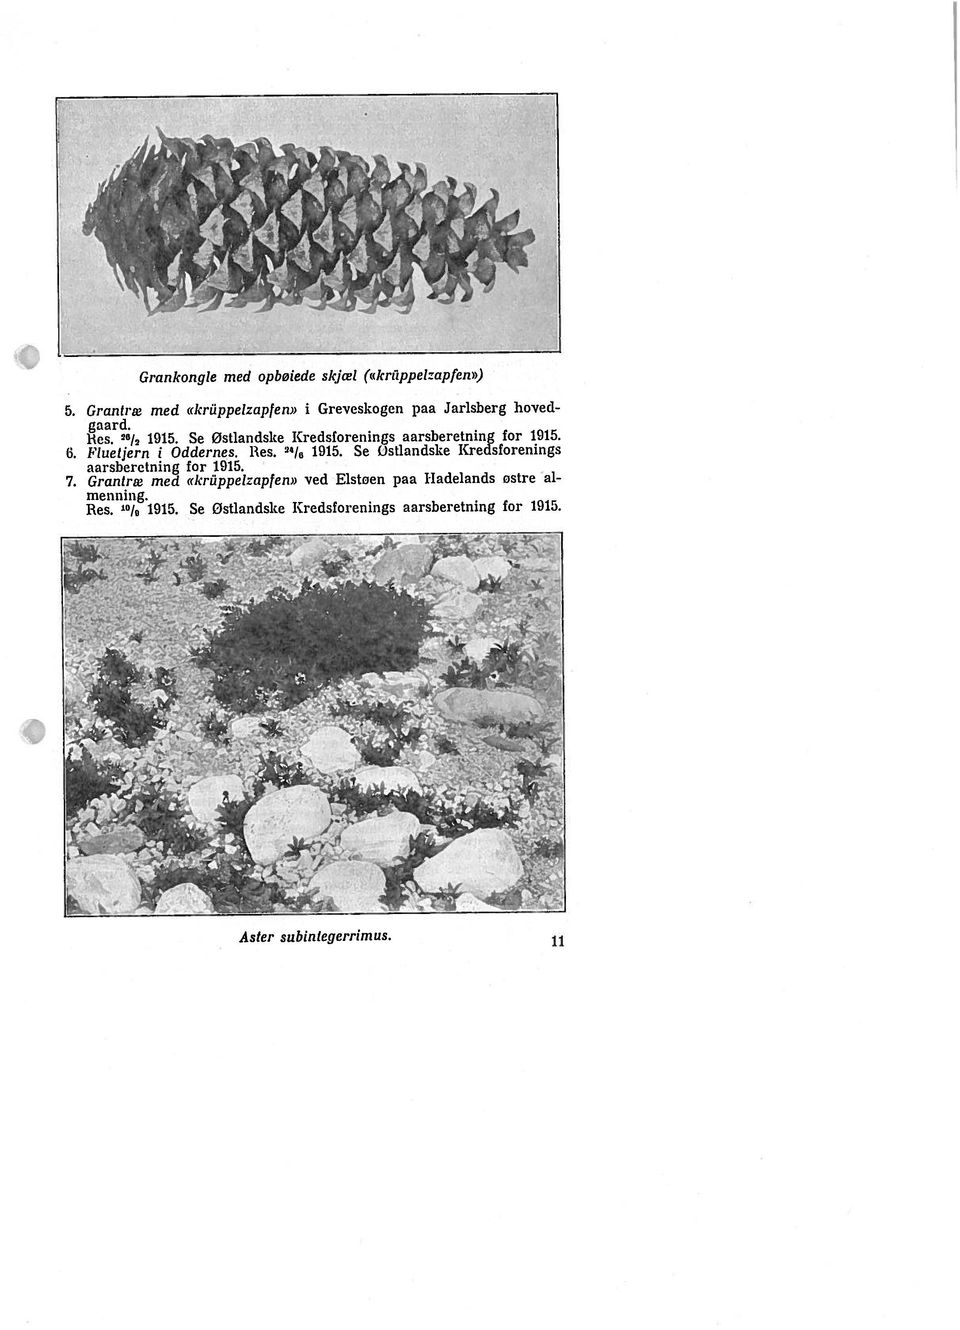 Se Ostlandske Krecisforenings 7. Granlræ med «ki Sppelzapfen» ved Elstoen paa 1-ladelands ostre ni Res. 1915.